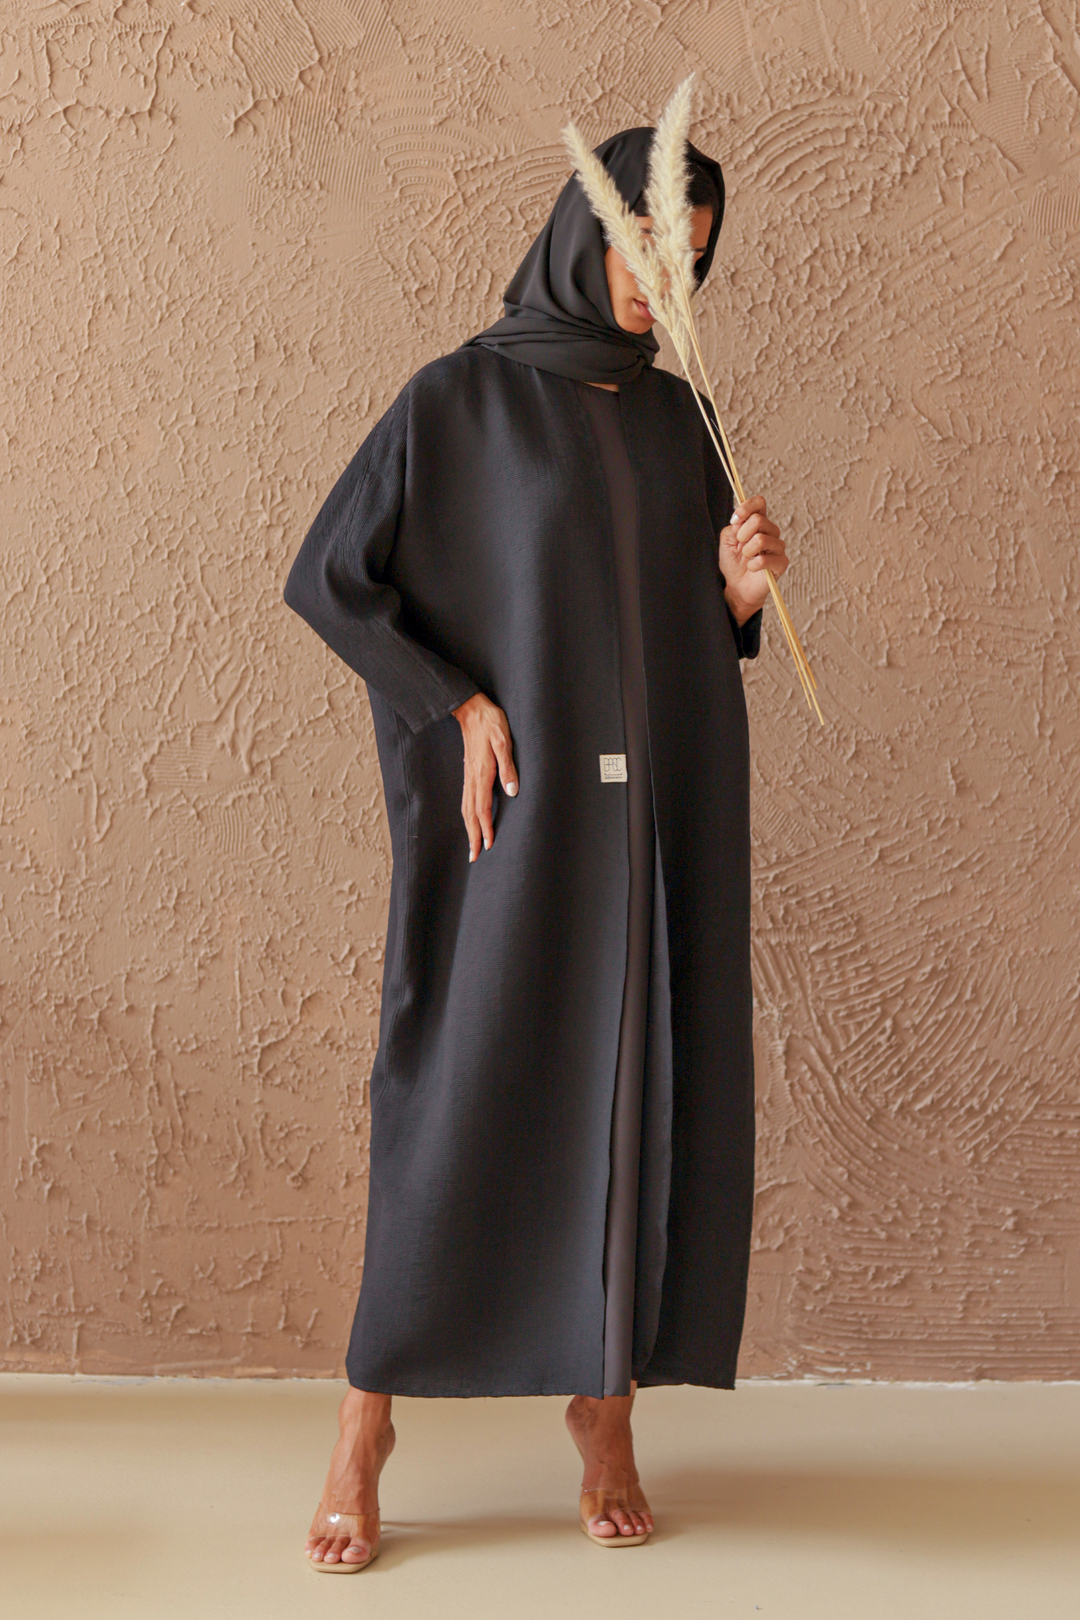 Basic Corduroy (Black Abaya) - Ready to Wear